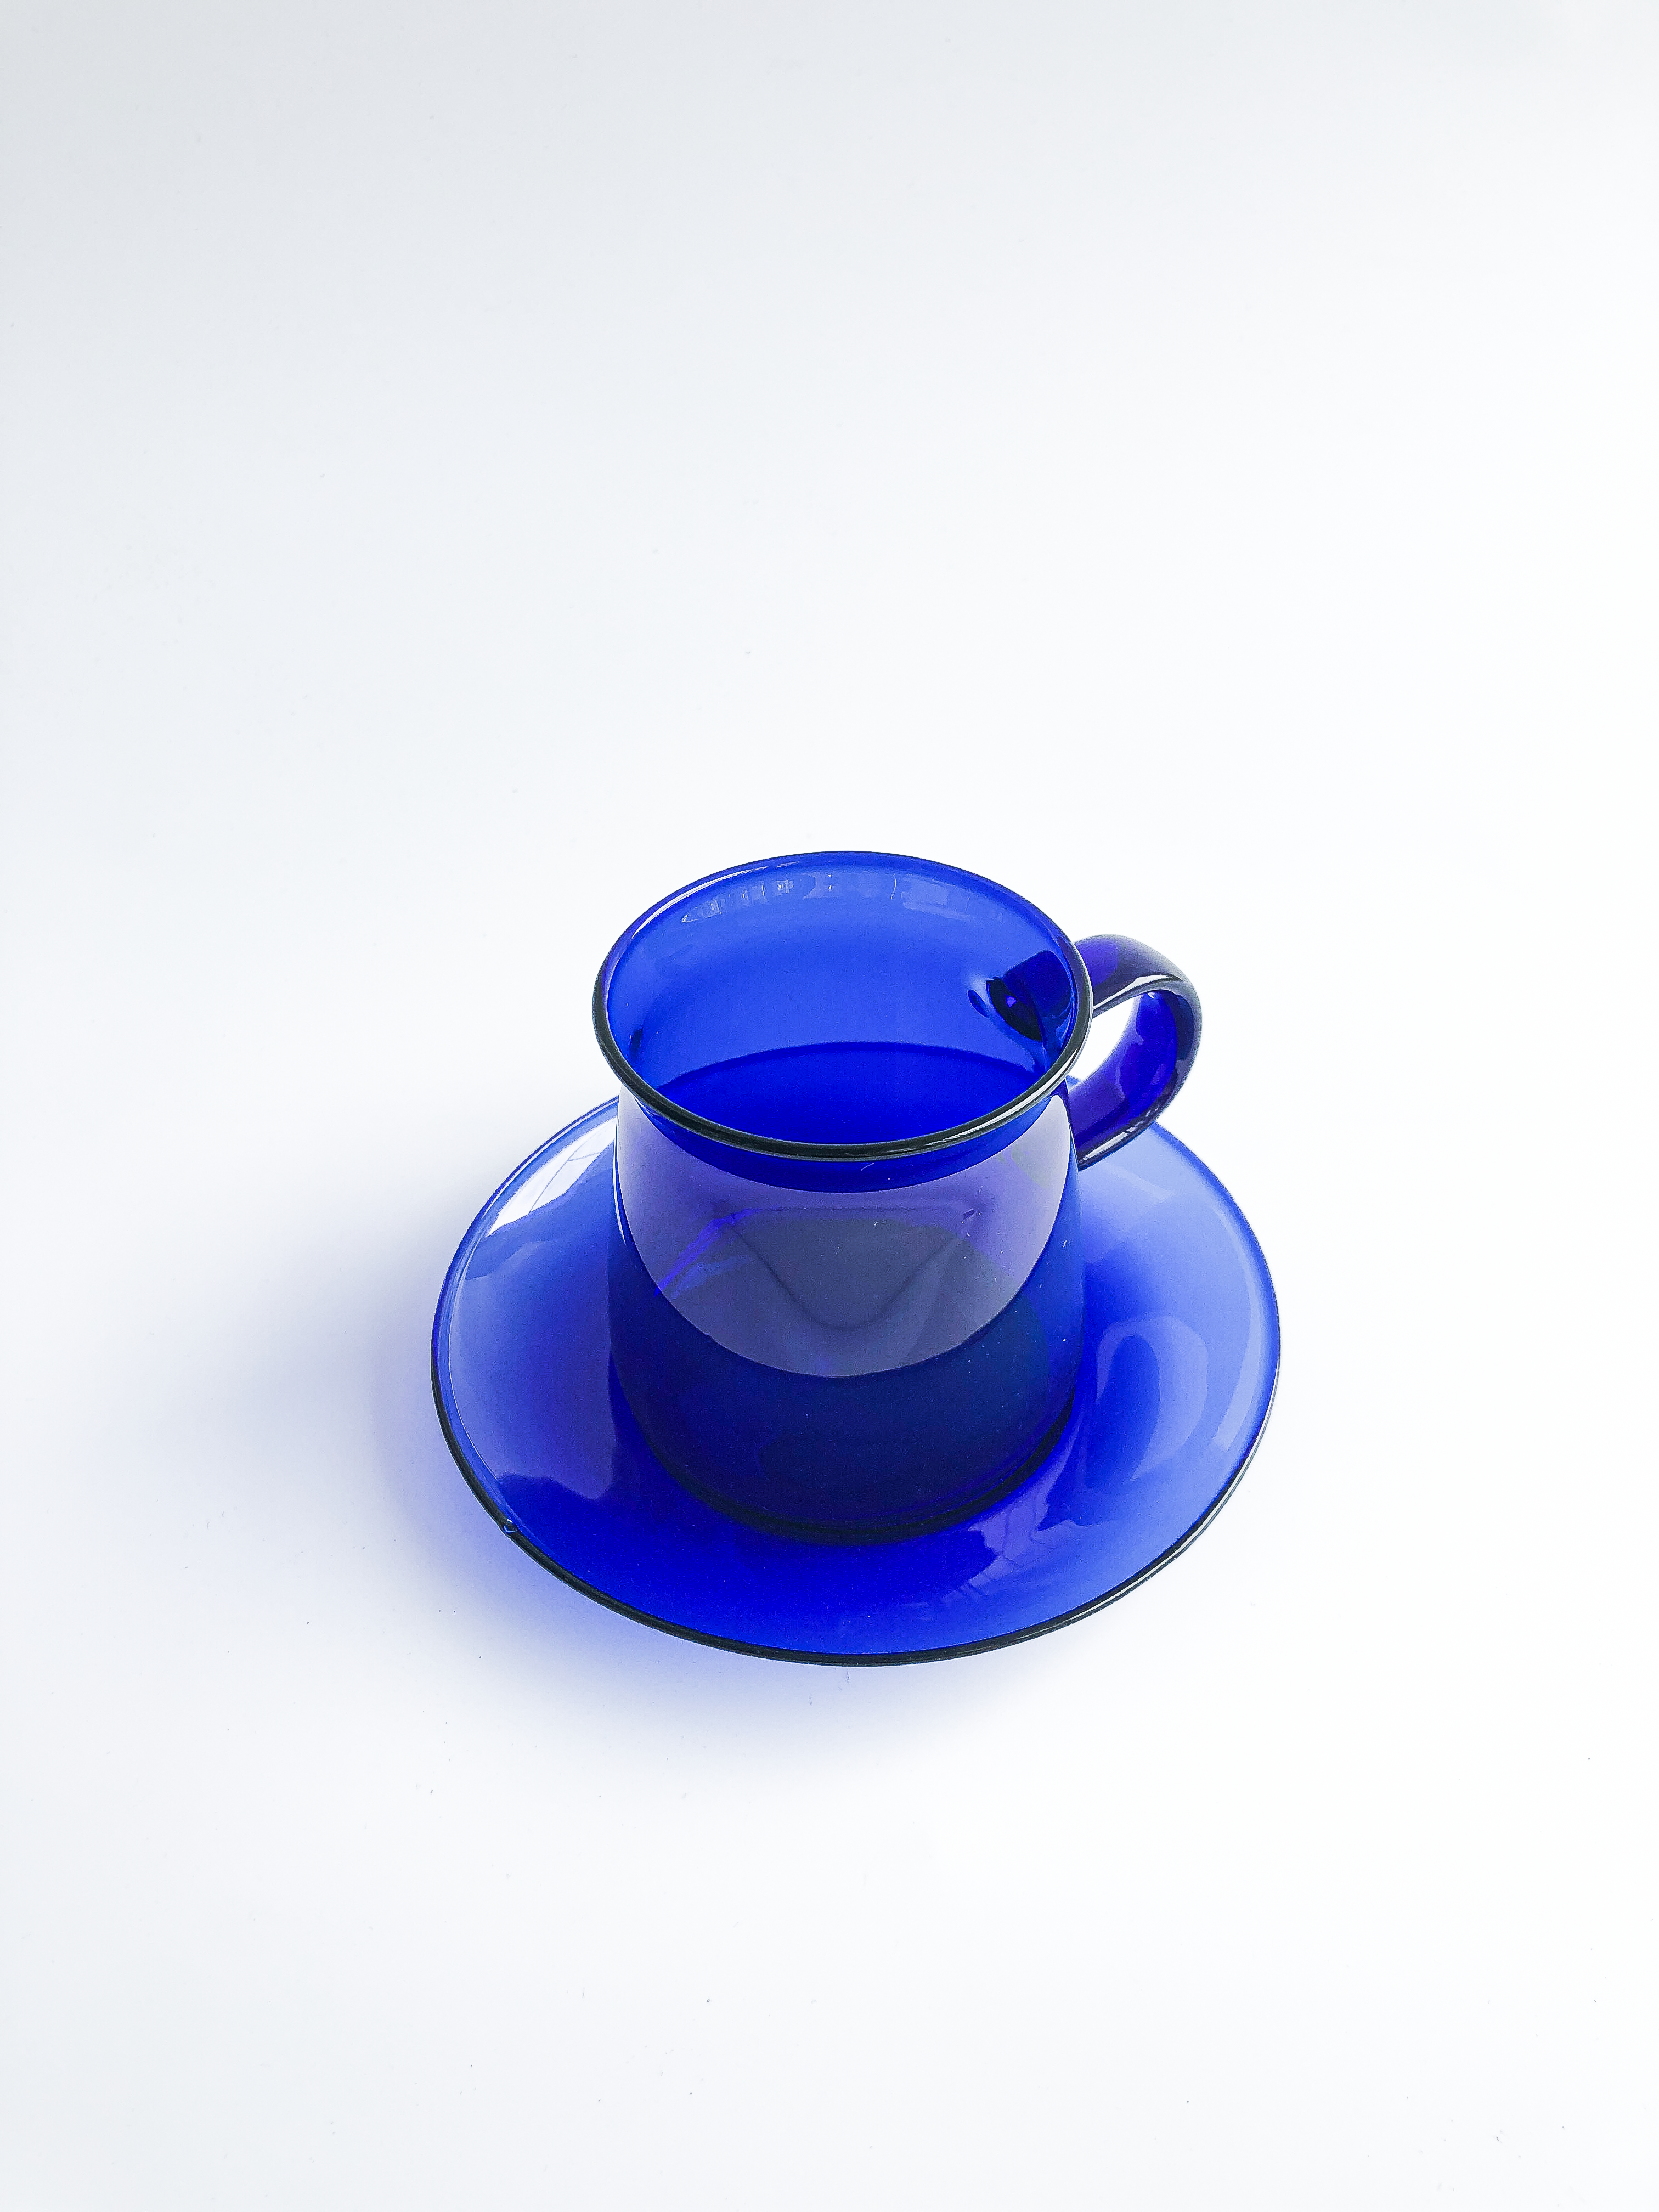 Ultramarine Tea Set by PROSE Tabletop